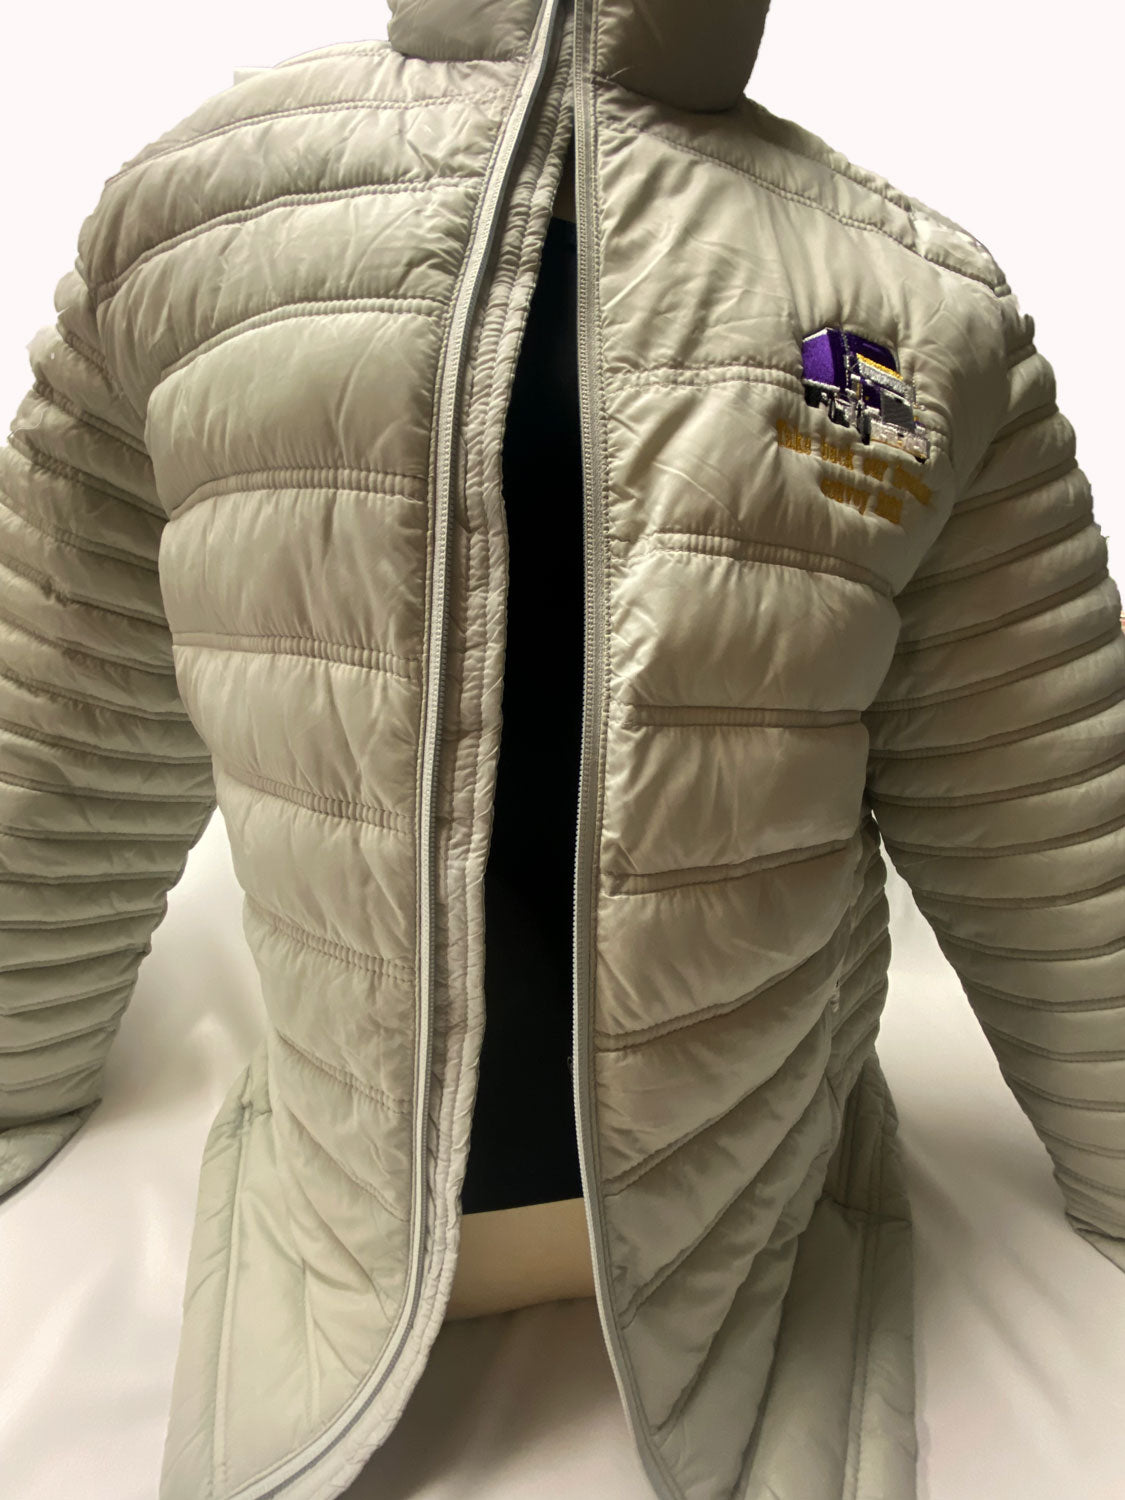 Trucker jacket ribbed design in cream colour 9CUSTOM ORDER)